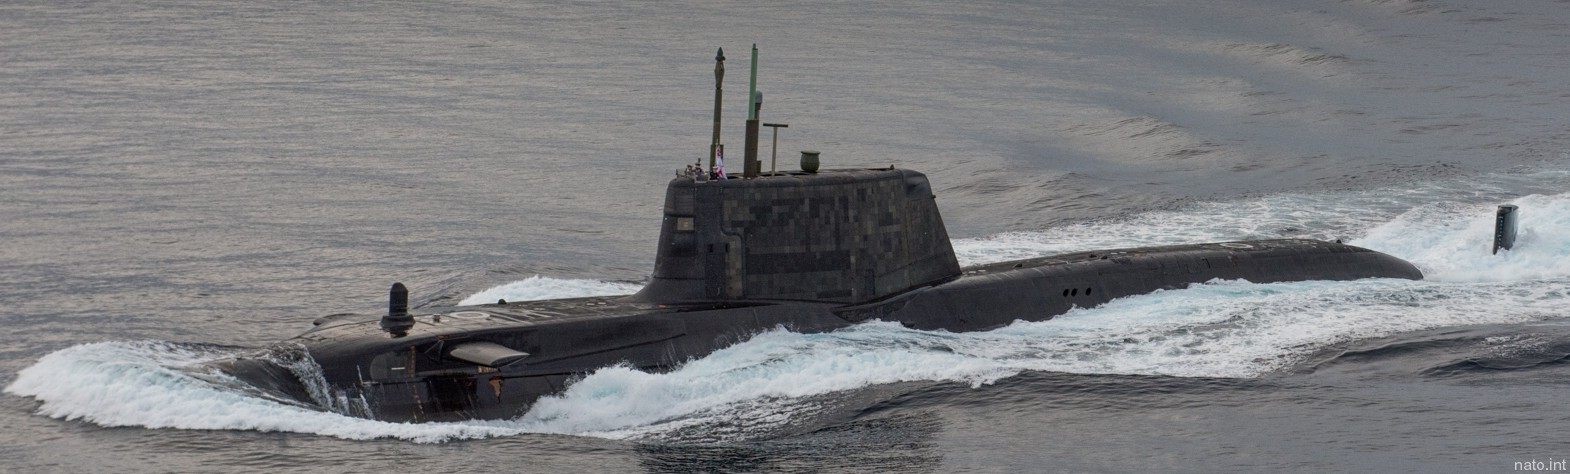 hms ambush s-120 astute class attack submarine royal navy 12